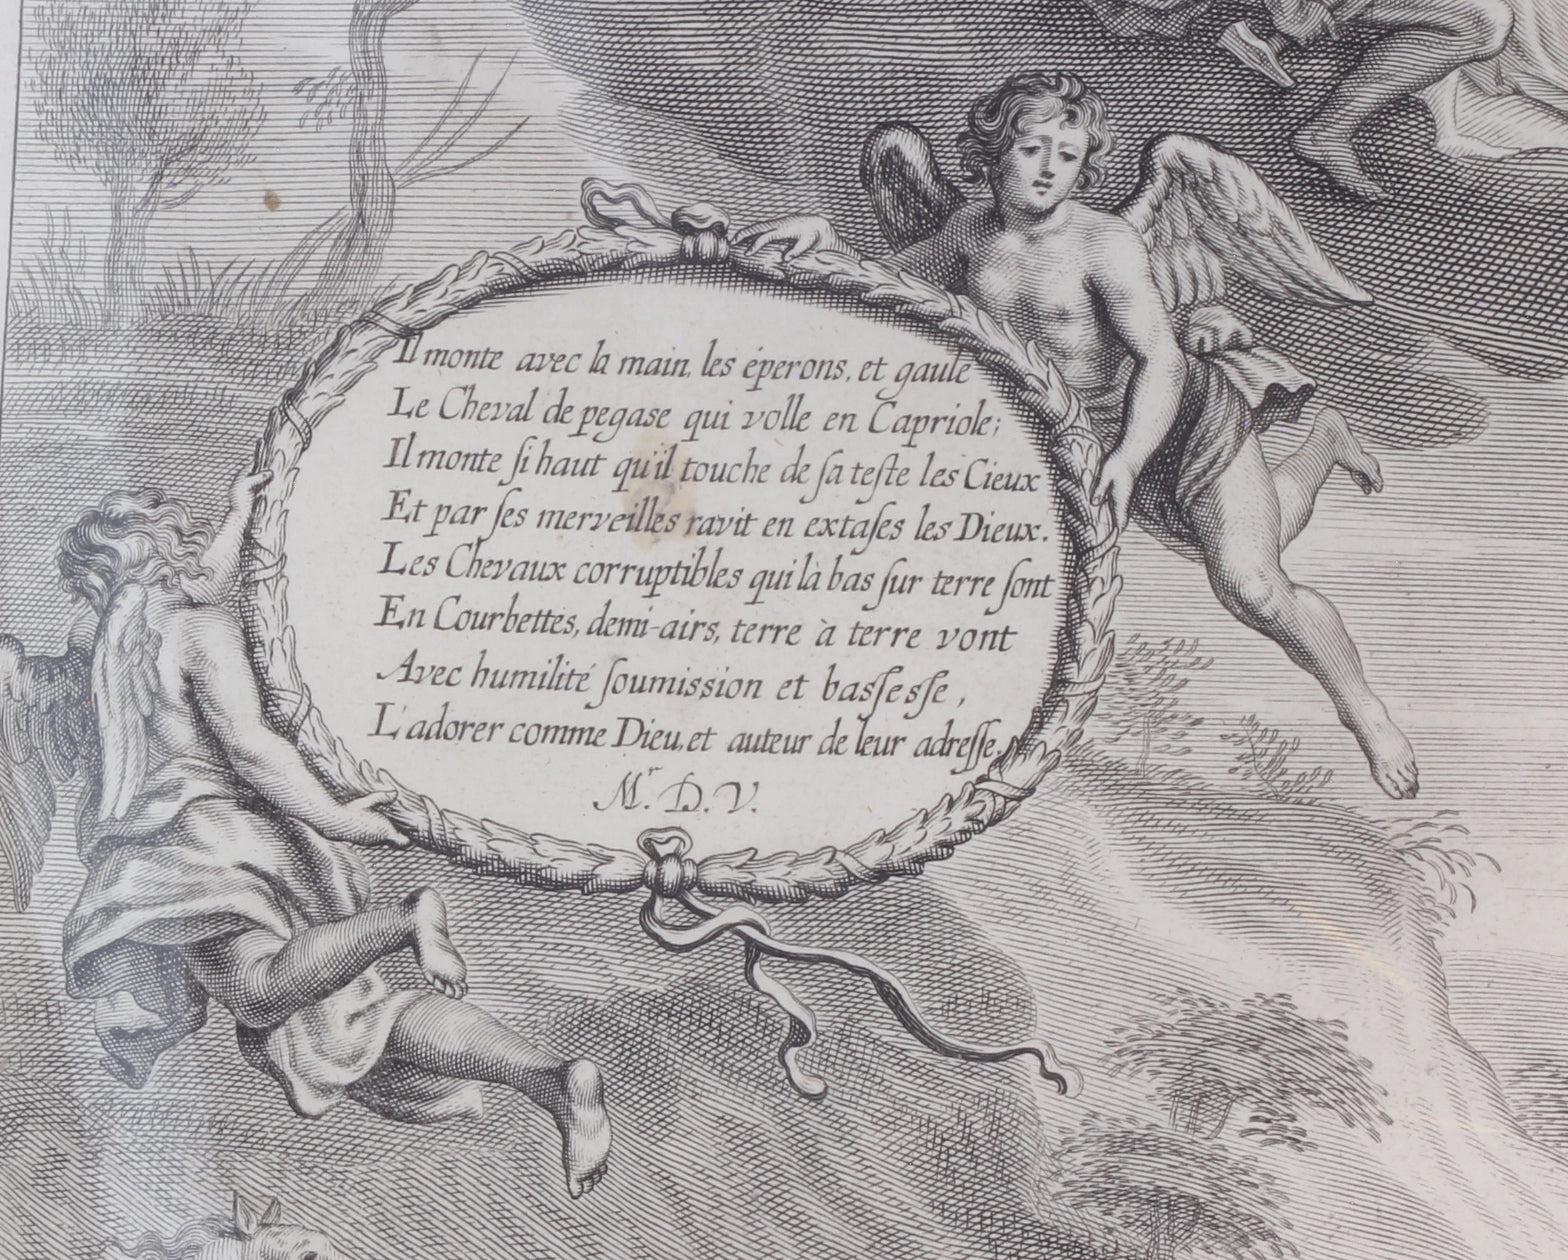 Plate 4 from "La Methode et Invention Nouvelle de Dresser les Chevaux" by William Cavendish, 1657 - The Duke of Cavendish Astonishing the Gods